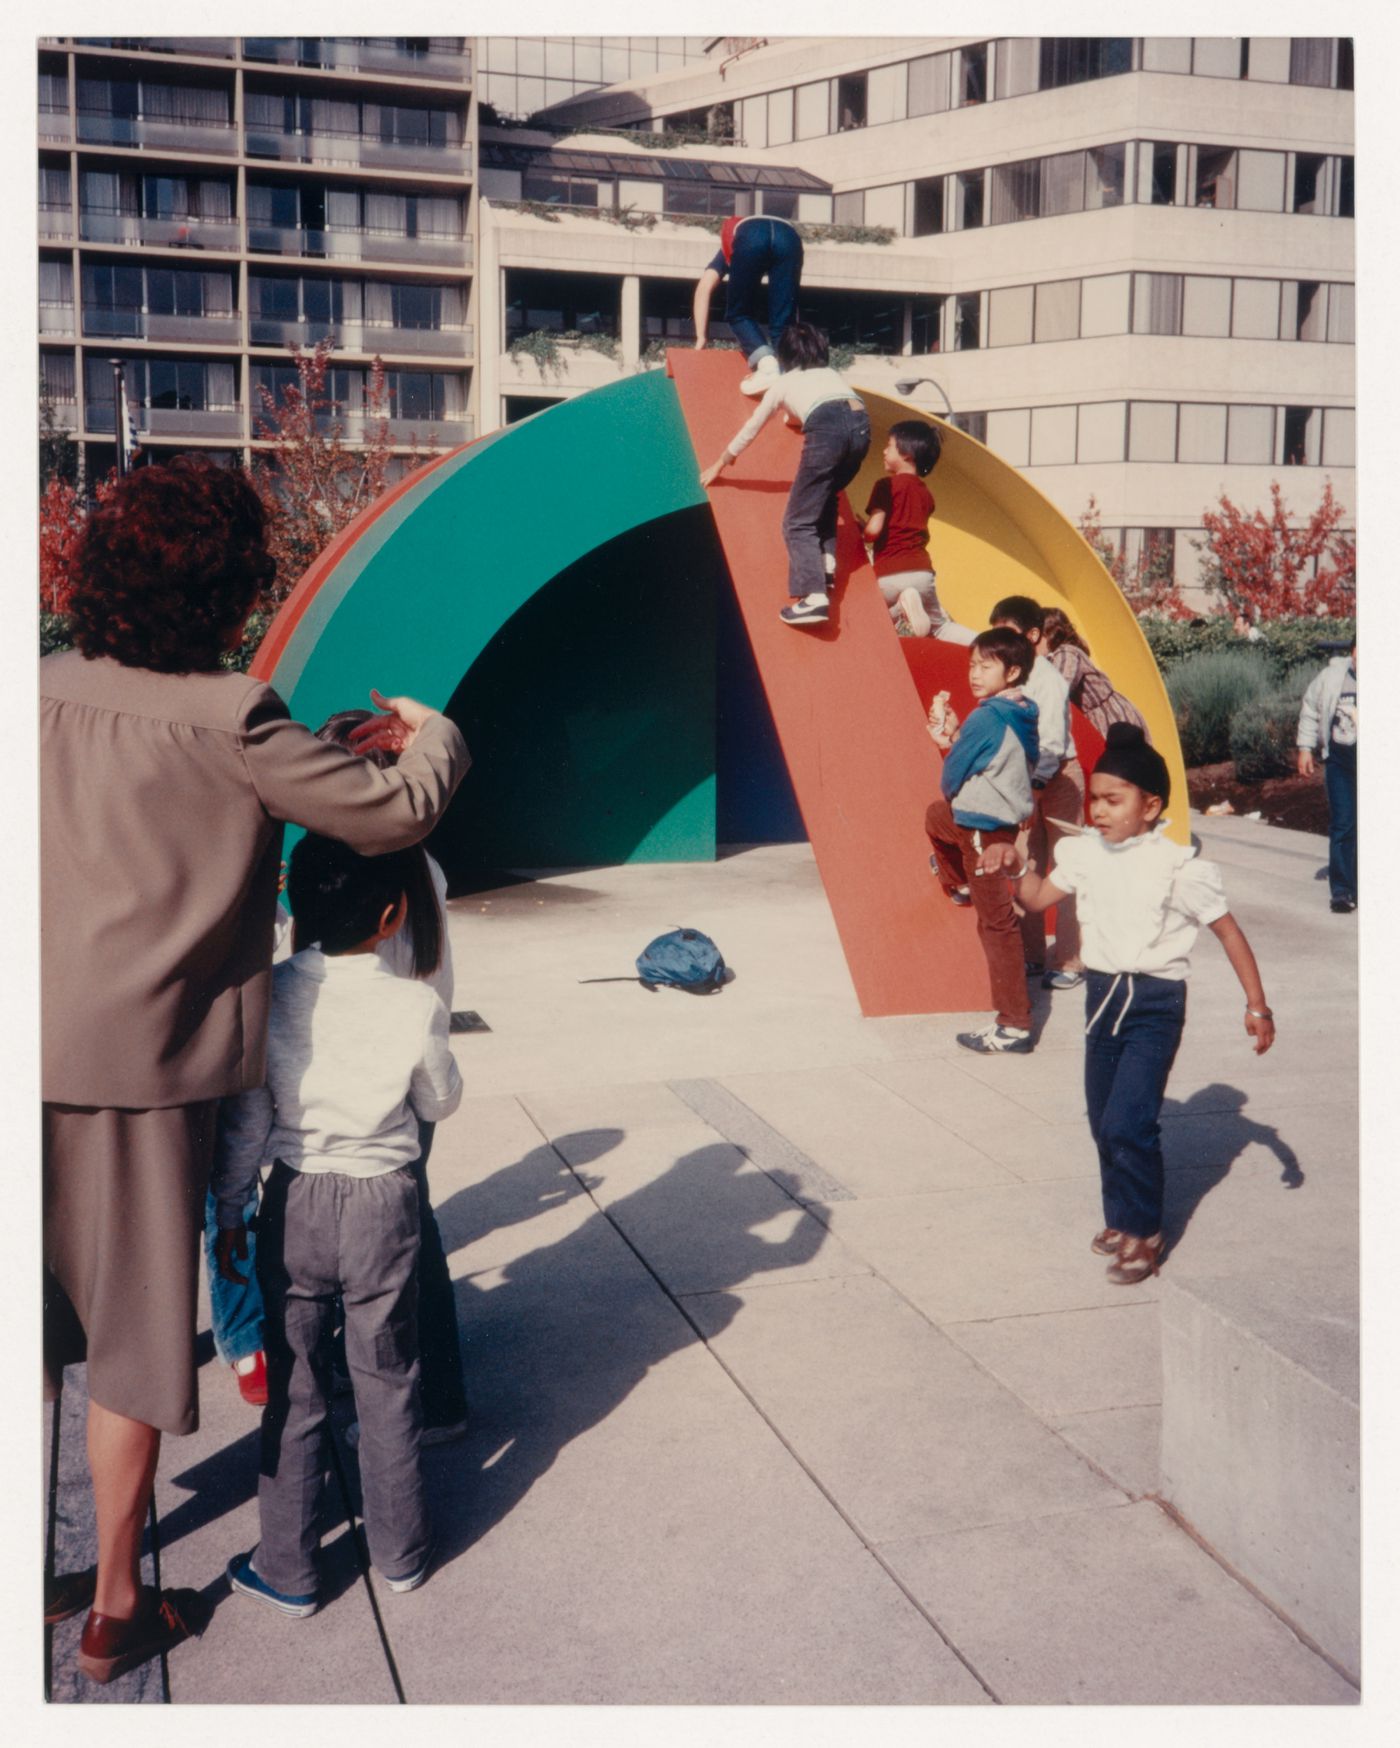 View of children playing in Talmud Torah School Playground, Vancouver, British Columbia